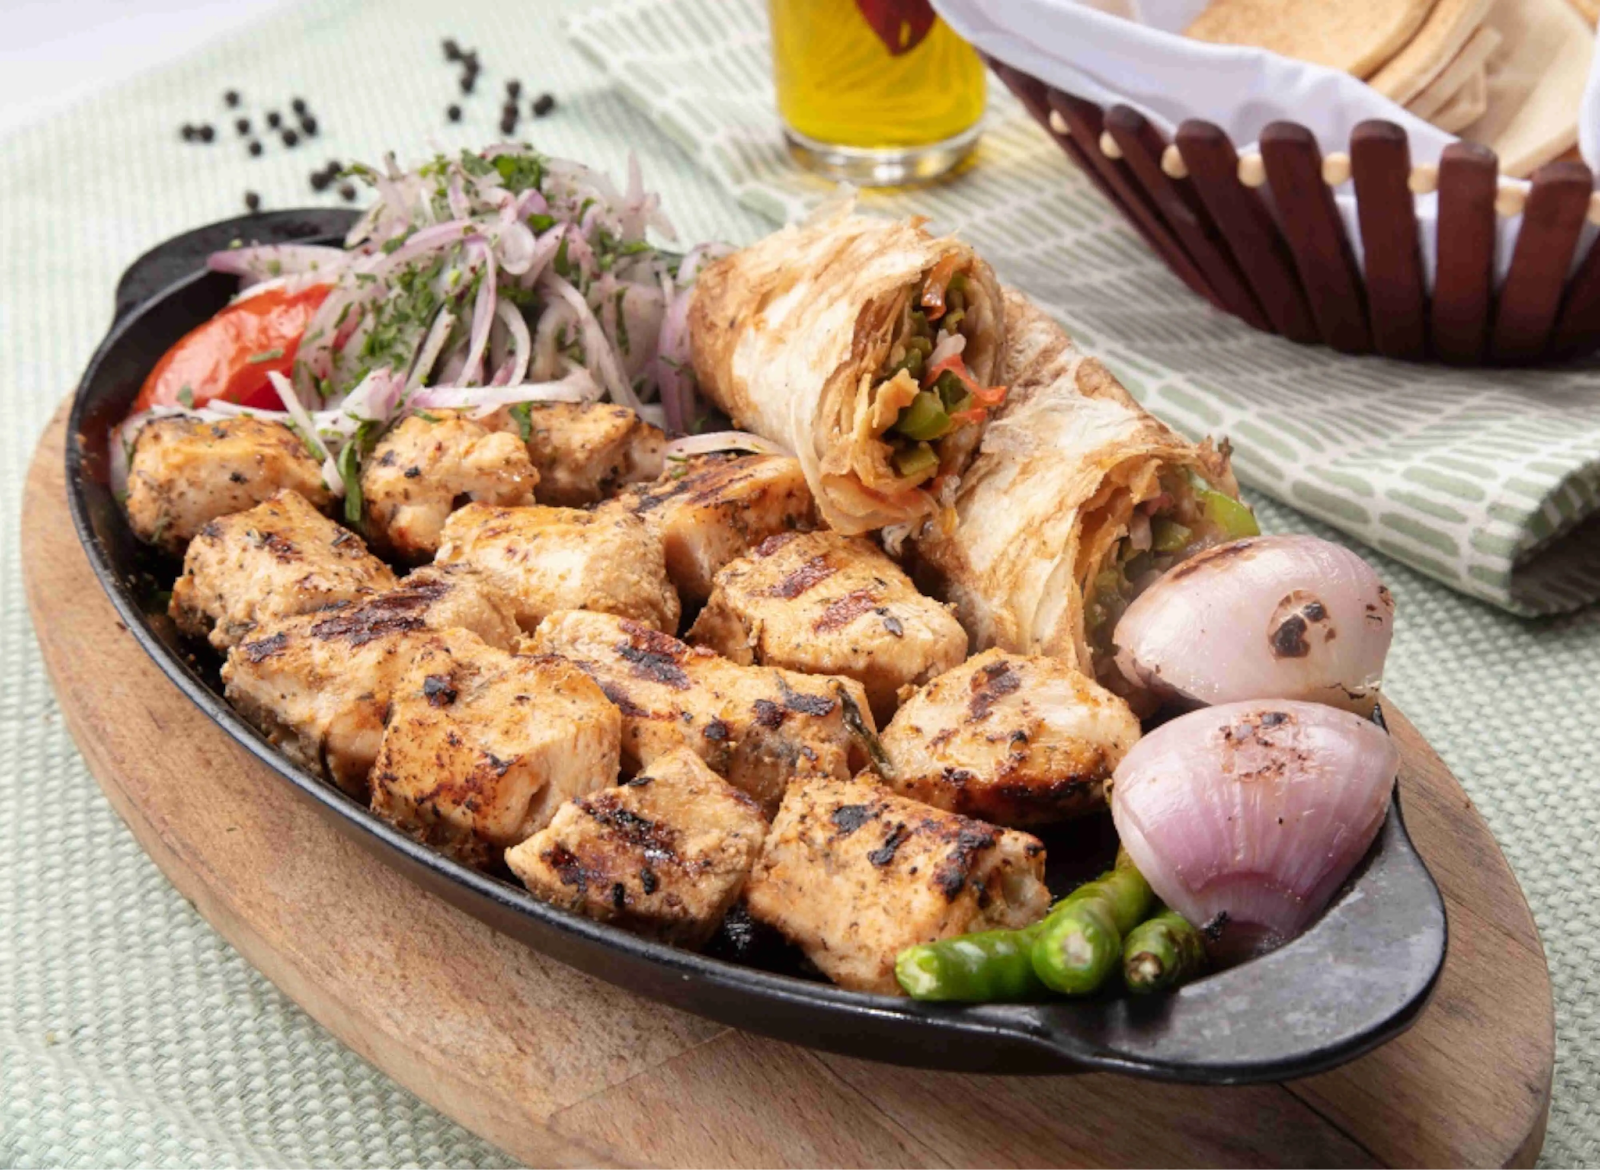 Best Arab Restaurants in KL